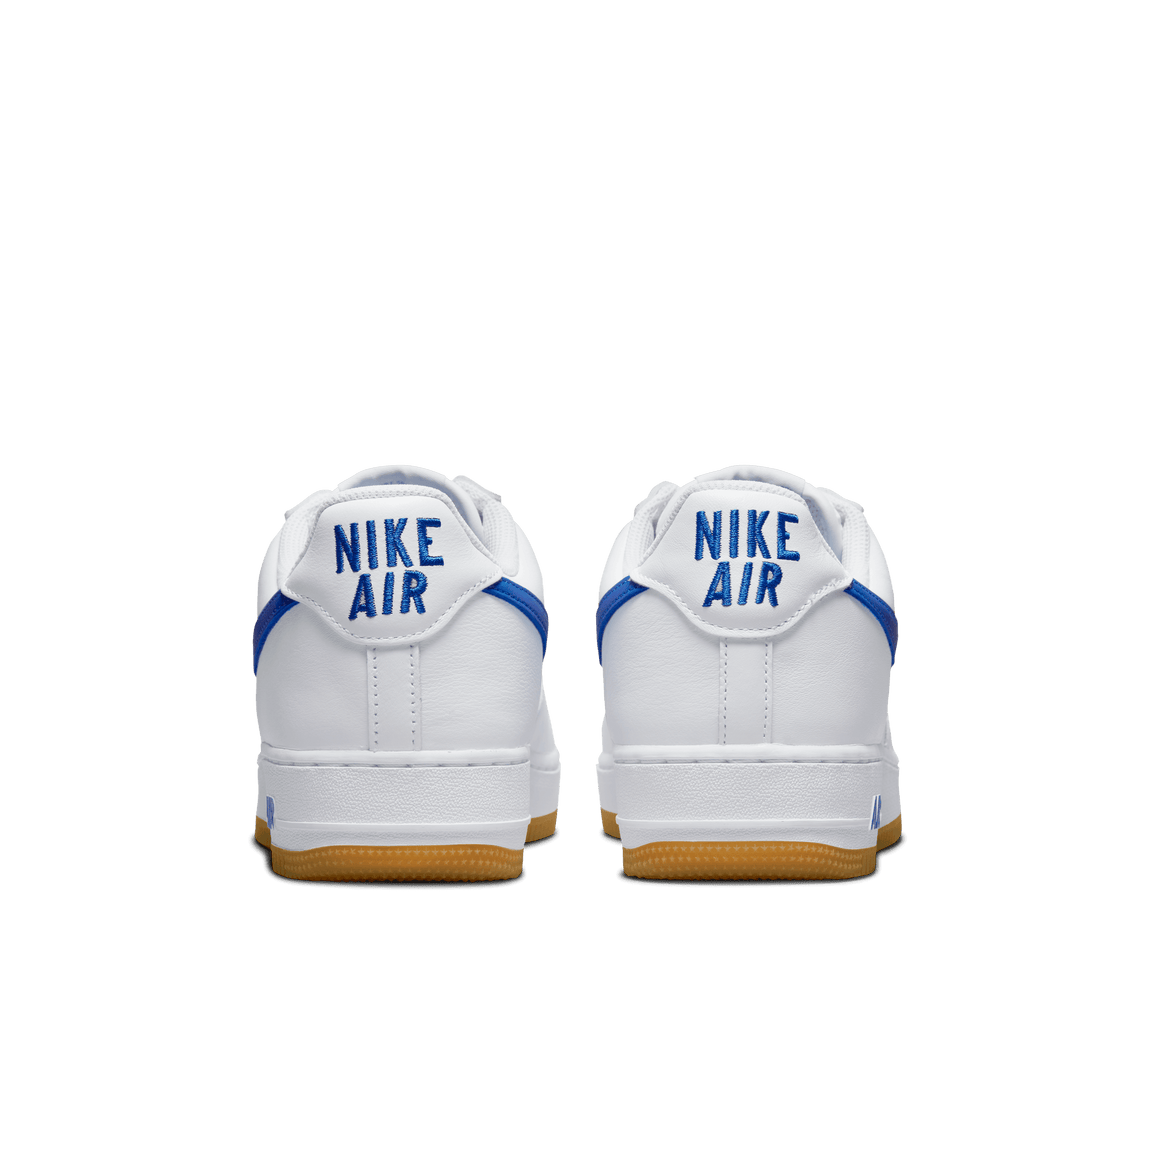 Nike Air Force 1 Low Retro (White/Royal Blue-Gum Yellow) - Nike Air Force 1 Low Retro (White/Royal Blue-Gum Yellow) - 